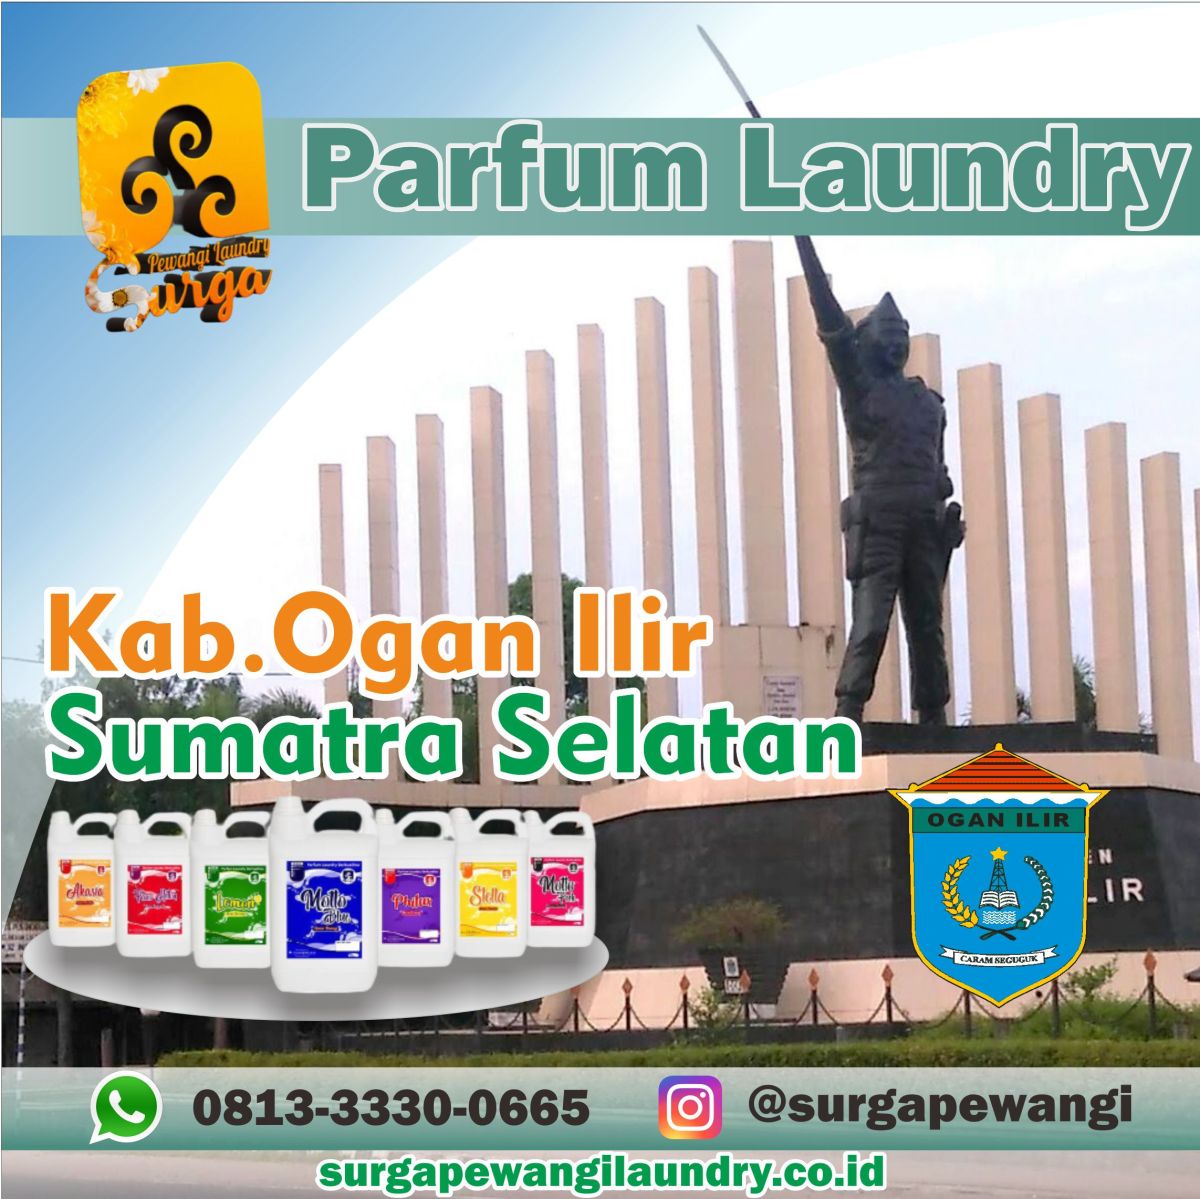 Parfum Laundry Kabupaten Ogan Ilir, Sumatara Selatan